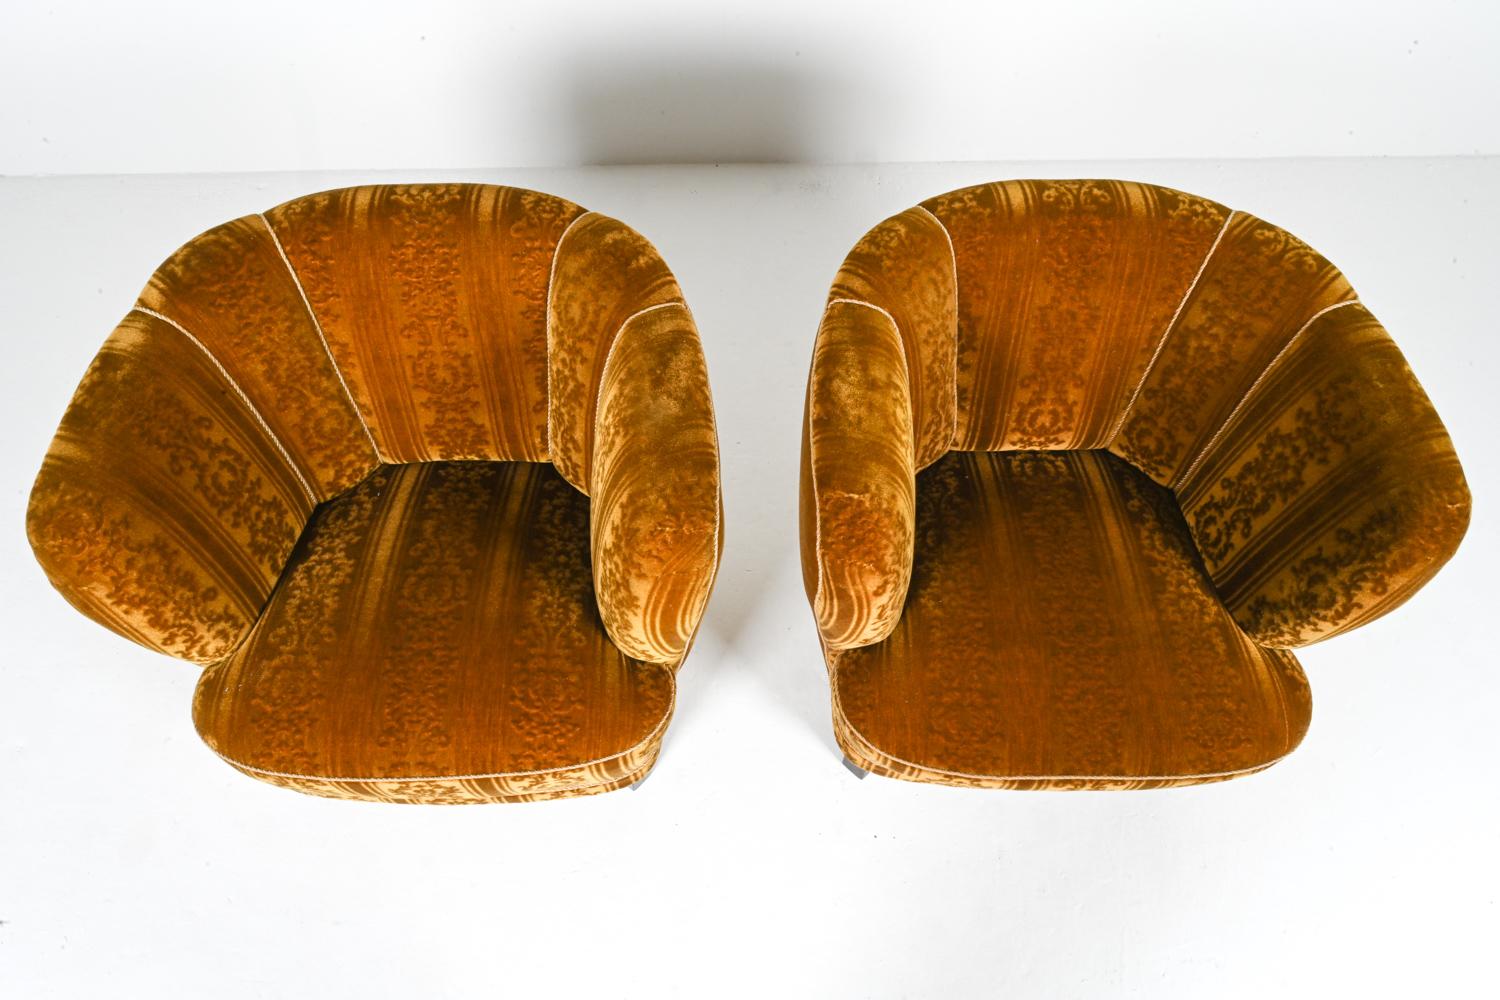 Scandinavian Modern Pair of Manner of Viggo Boesen Lounge Chairs by Slagelse, c. 1940's